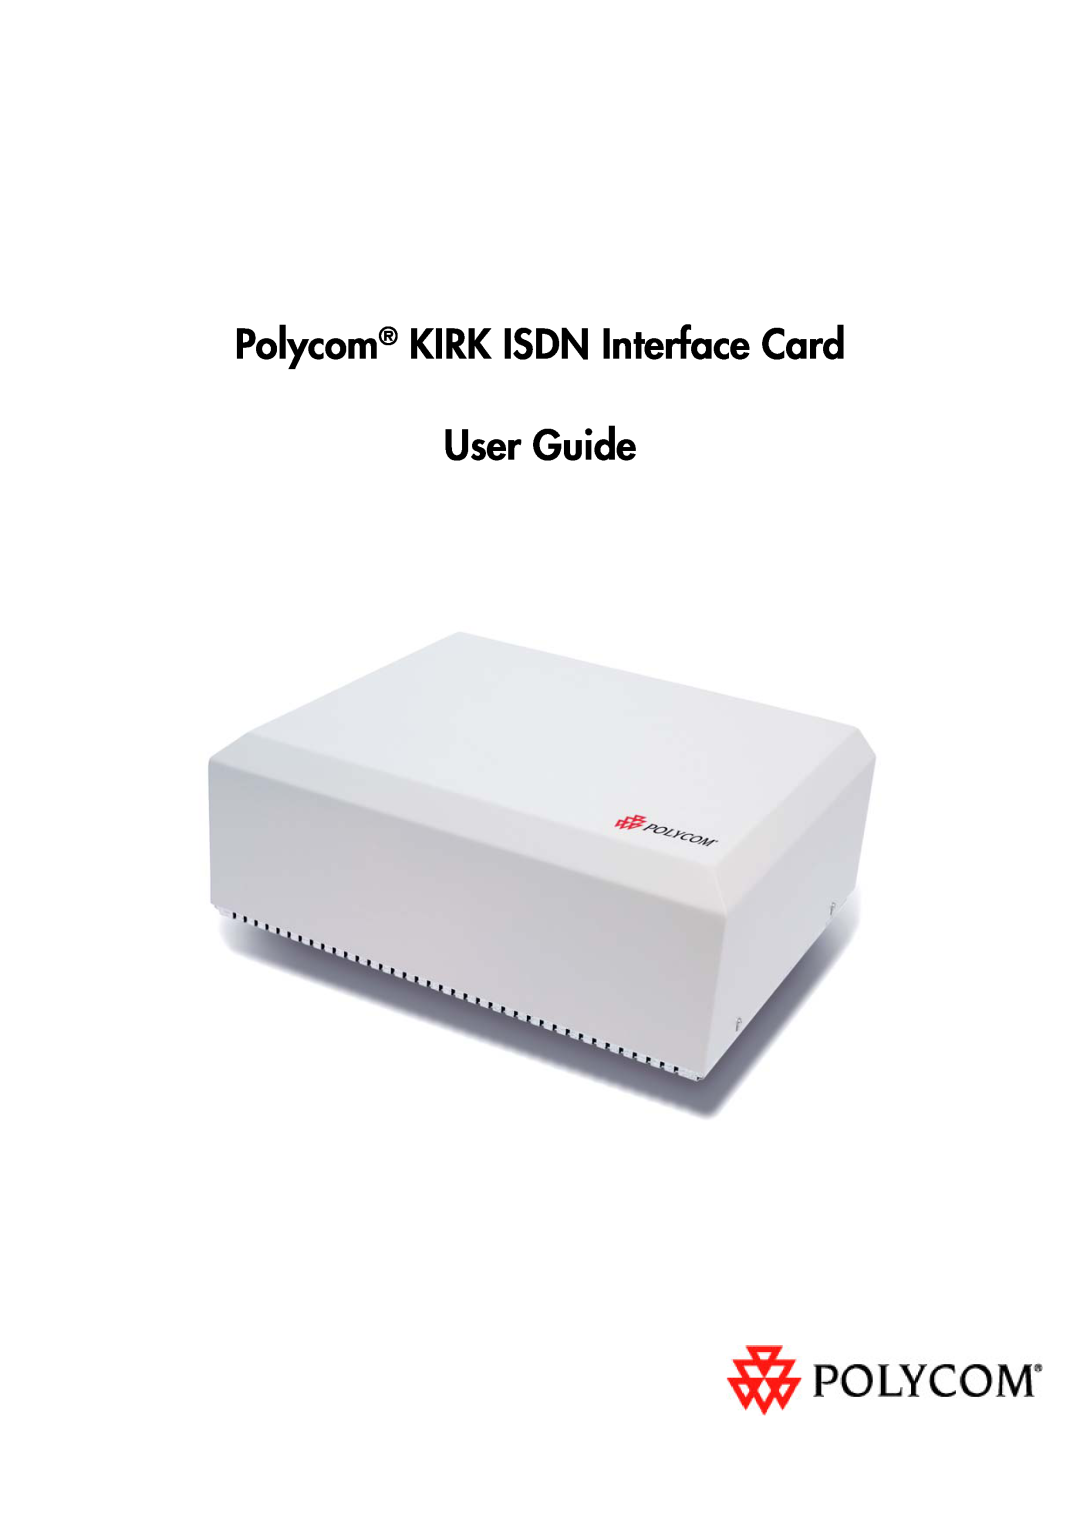 Polycom manual Polycom KIRK ISDN Interface Card, User Guide 